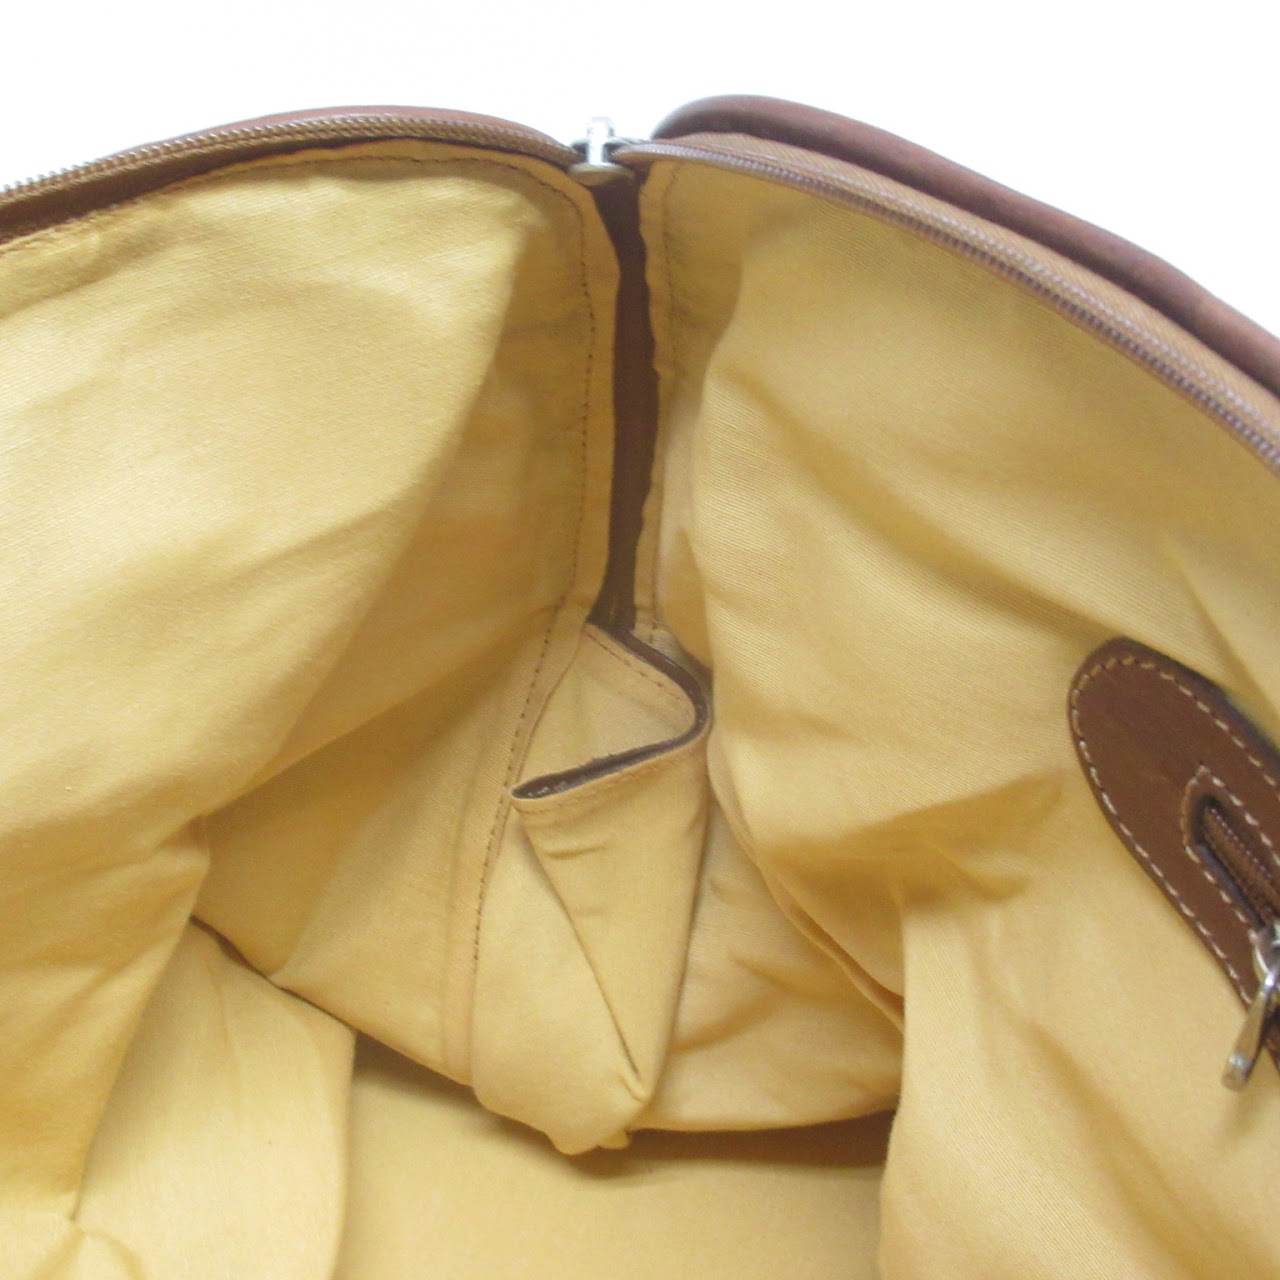 Lopez Taibo Ponyhair & Leather Weekender Bag